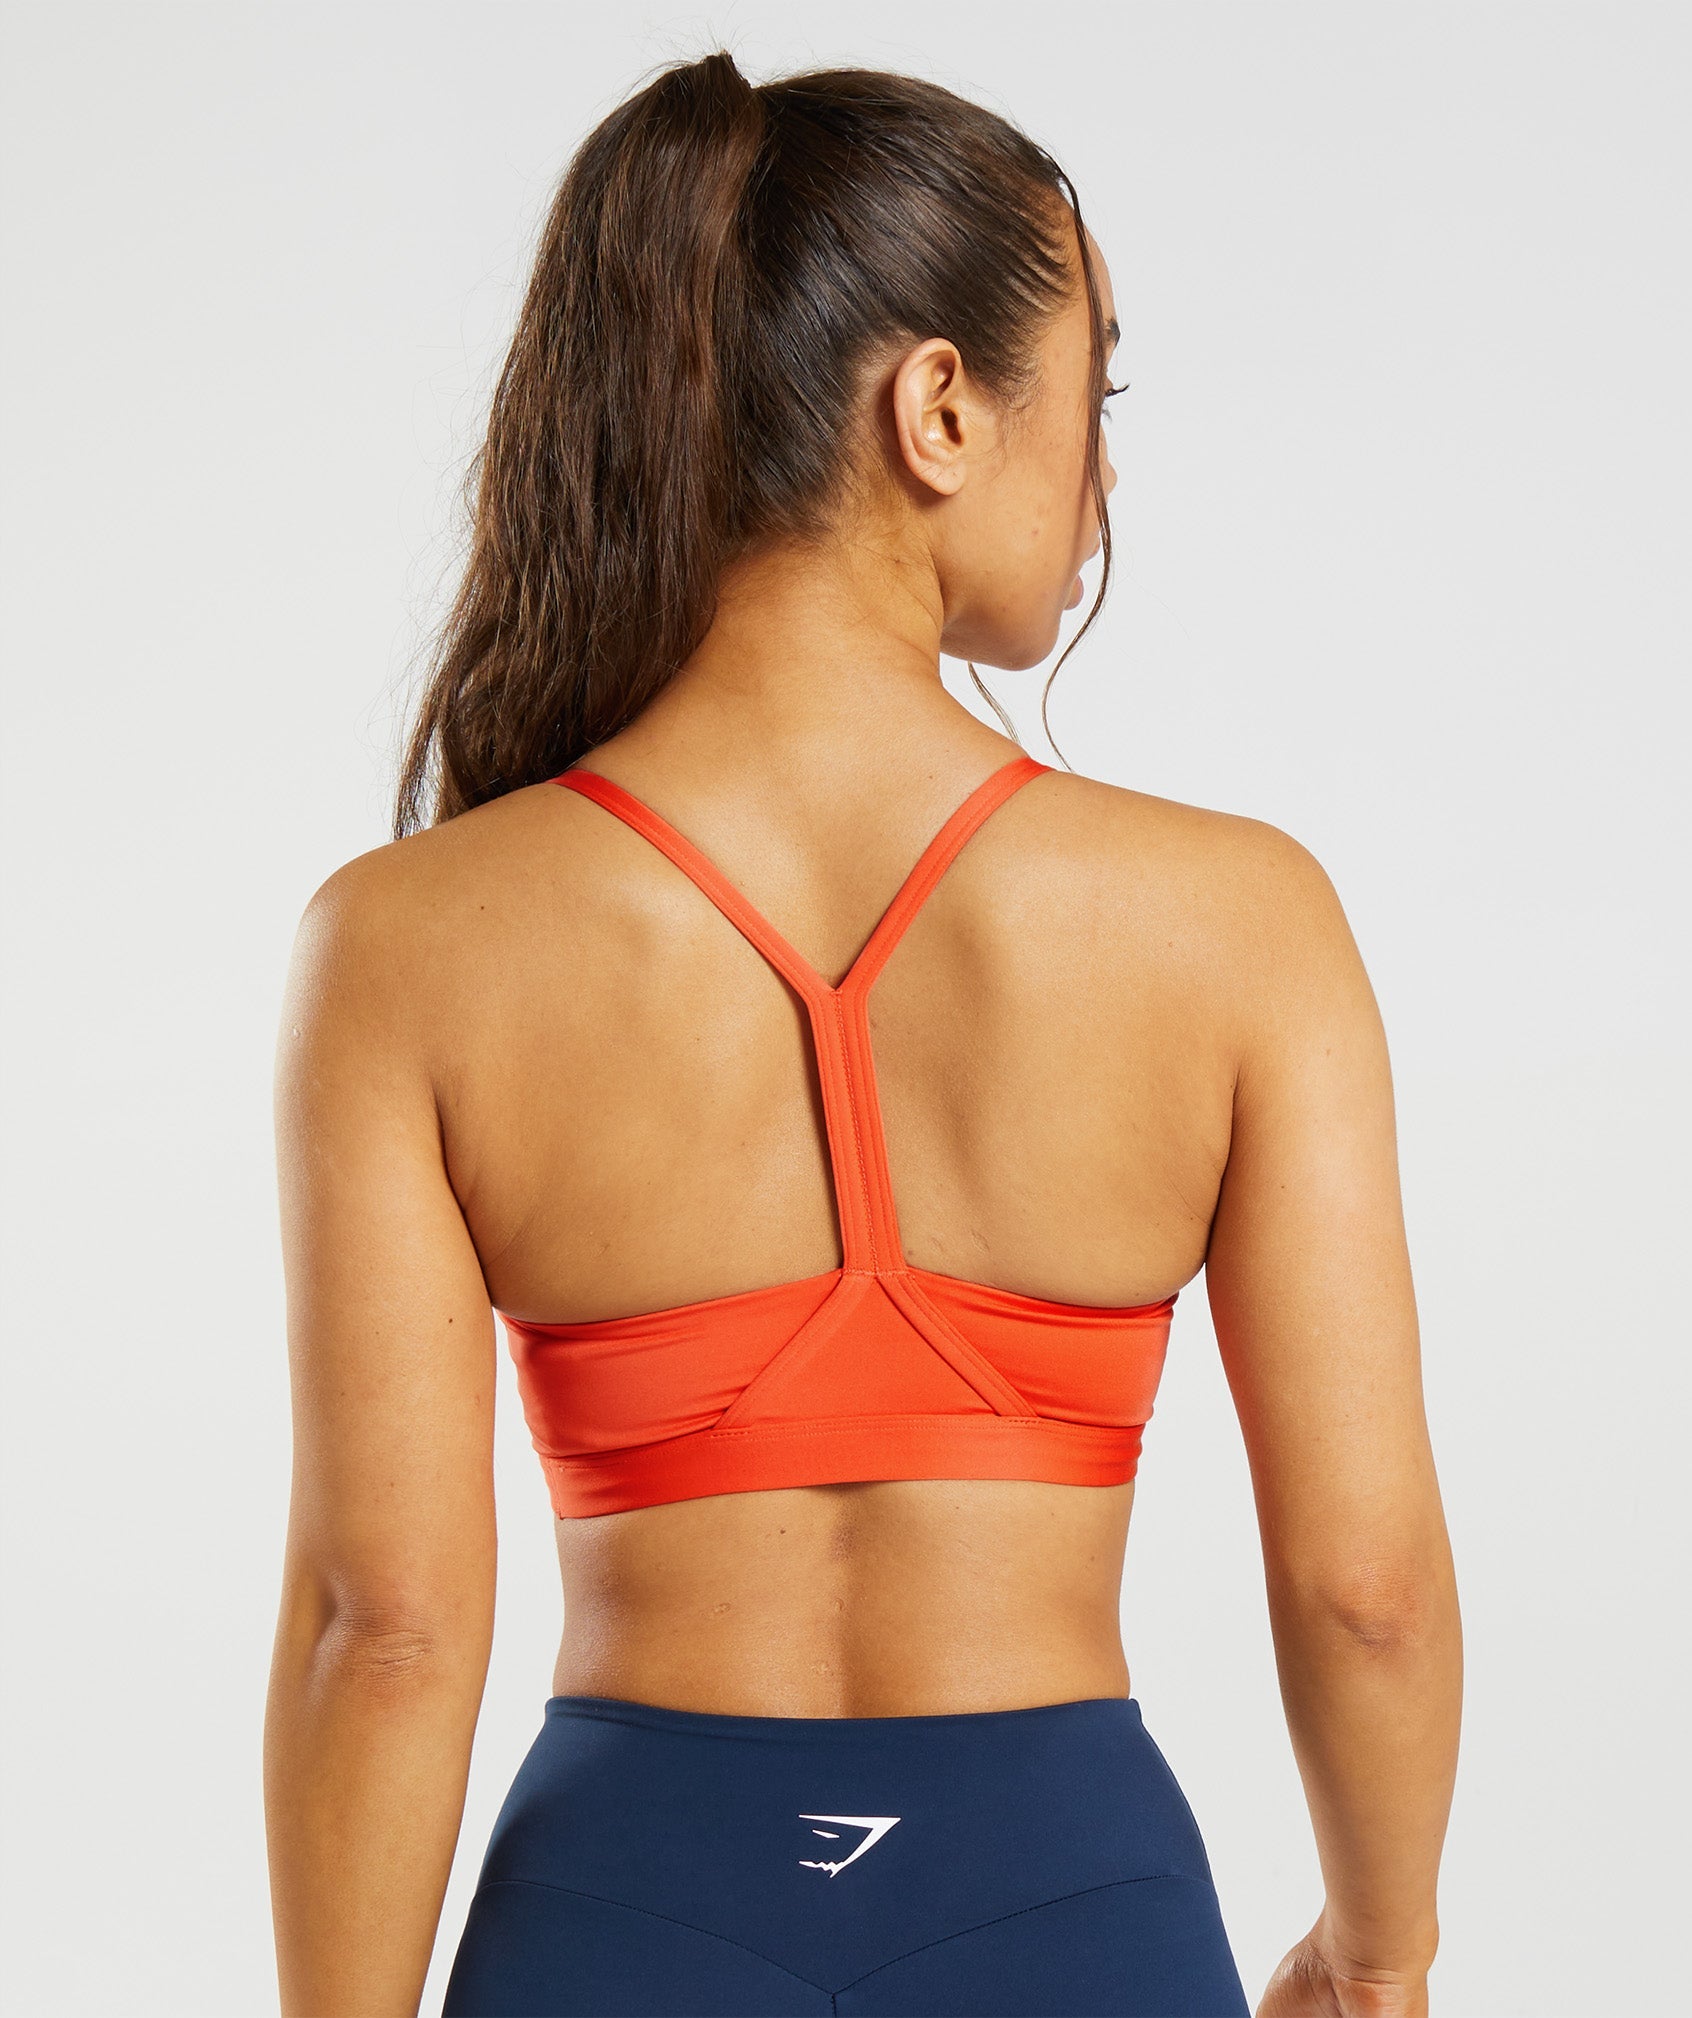 EUC Women's Nike Sports Bra - Orange/Black - Size XS